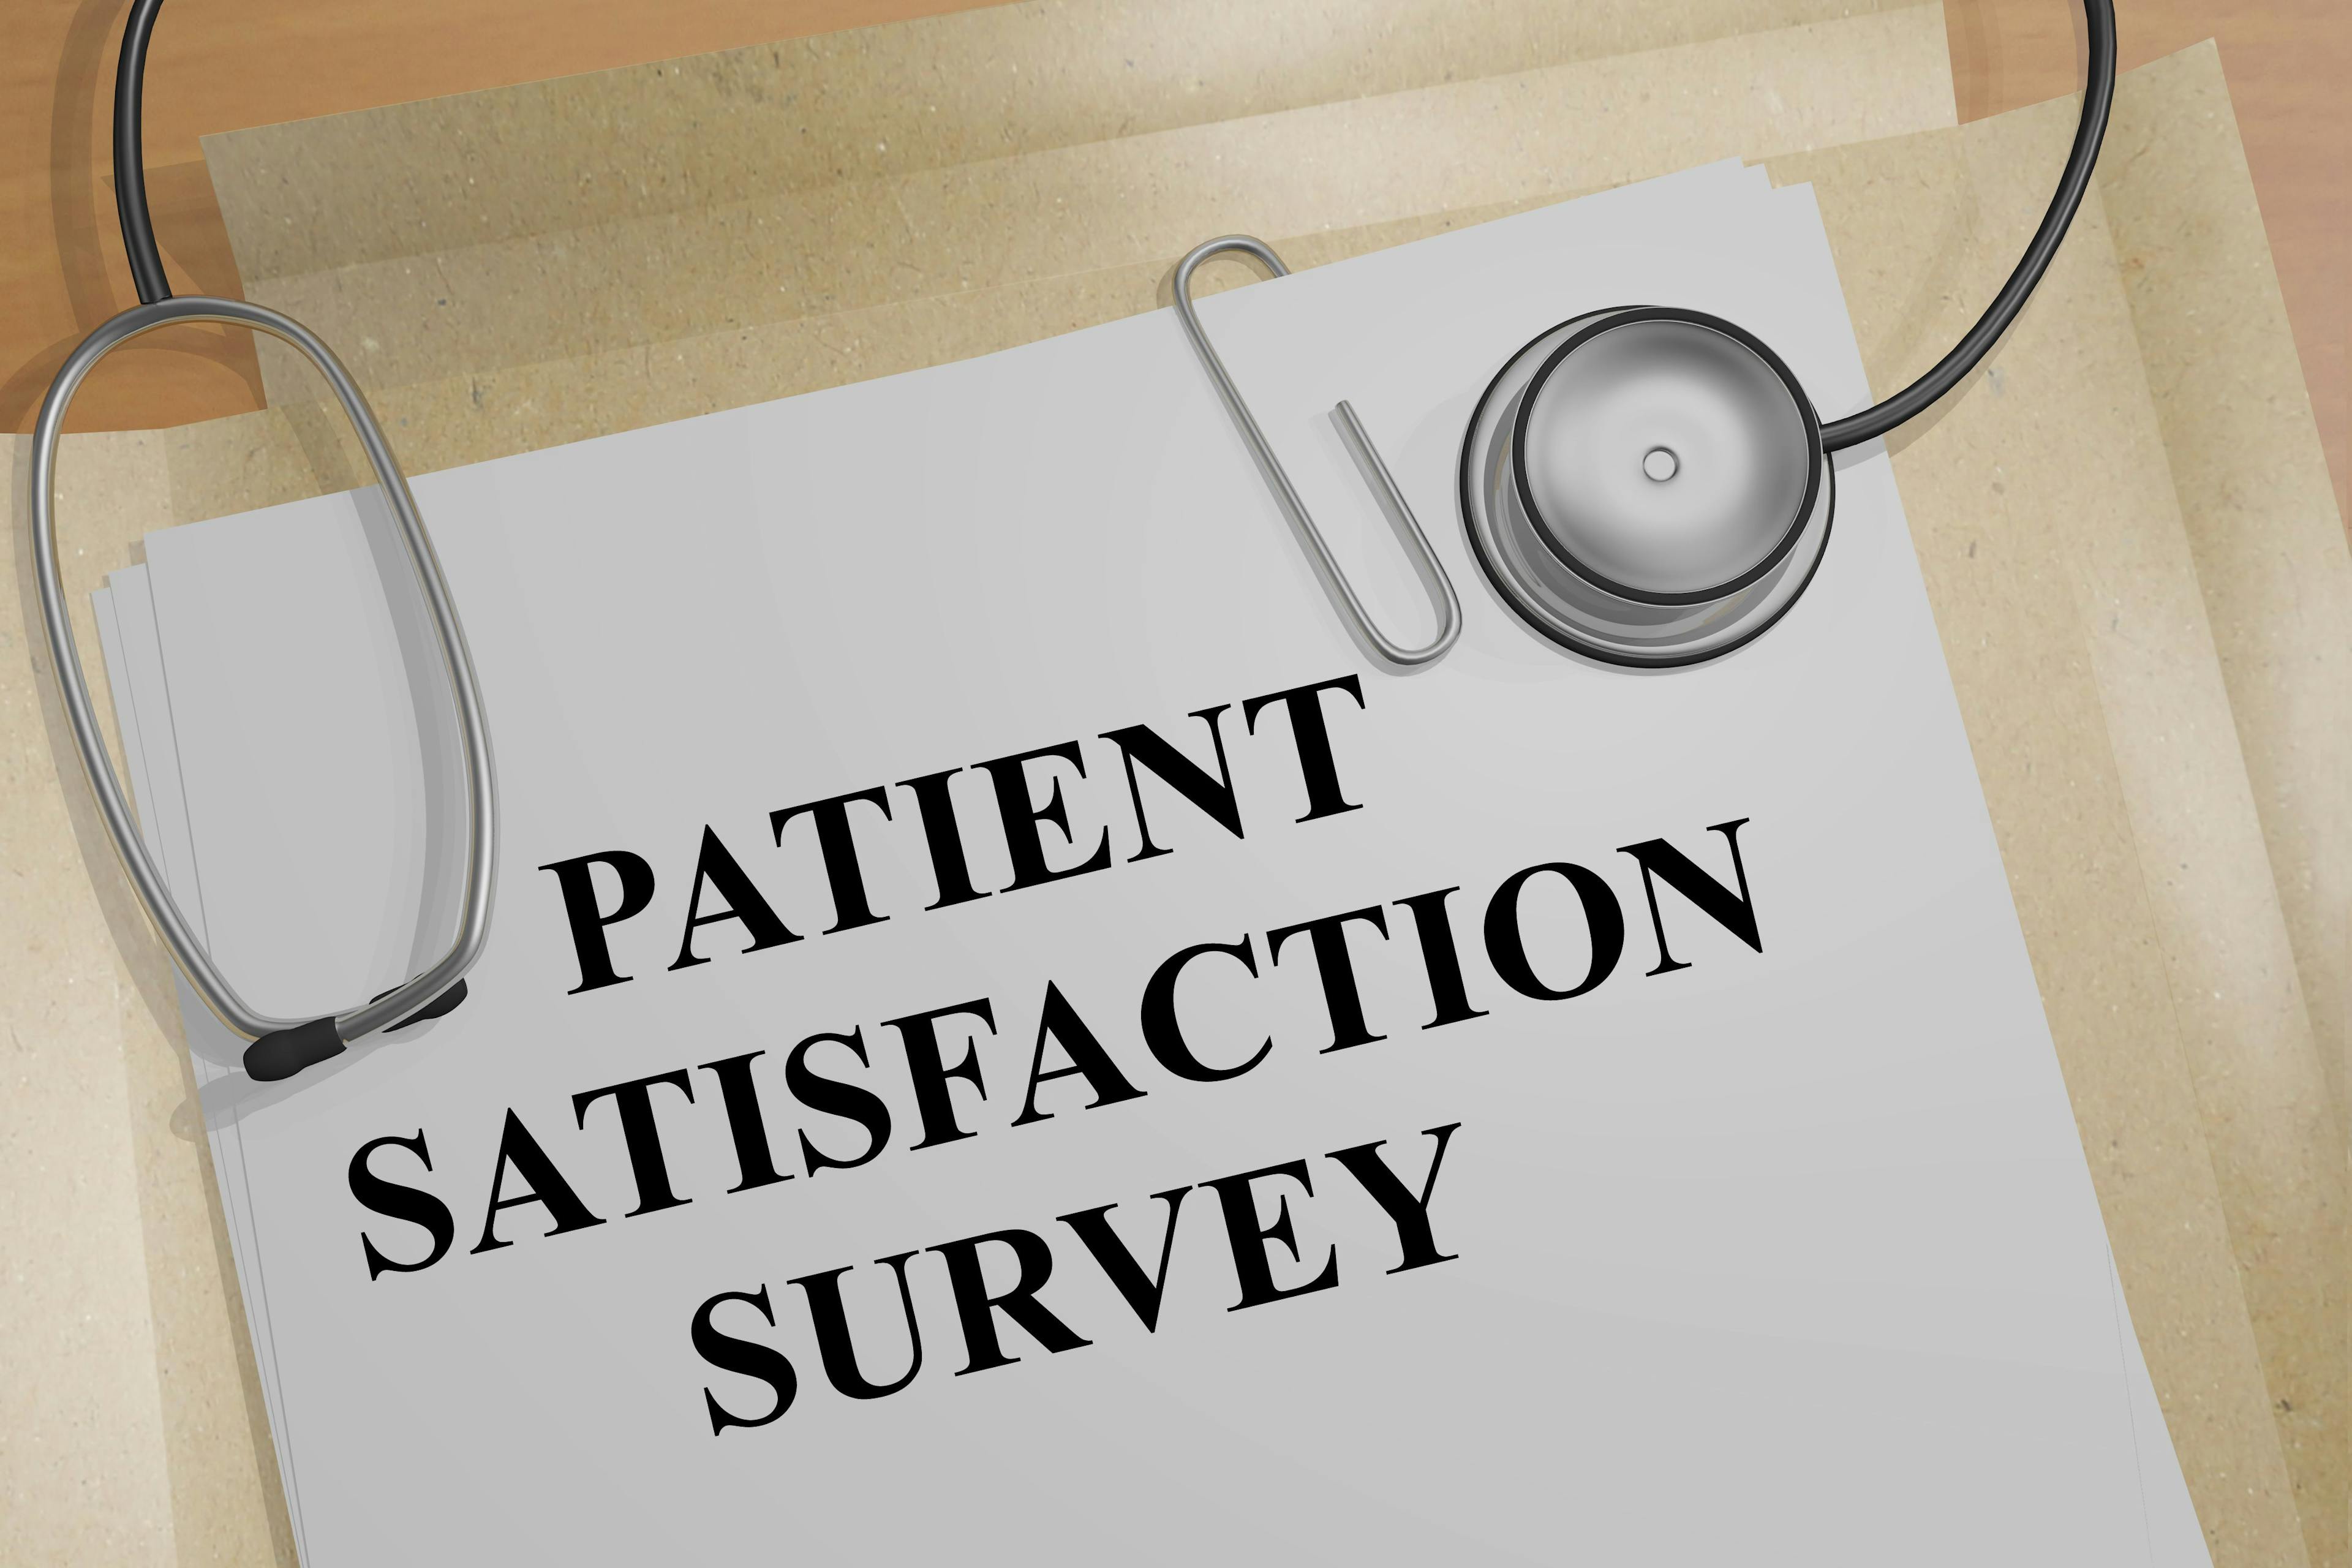 stethoscope laid on Patient Satisfaction Survey document ©hafakot-stock.adobe.com